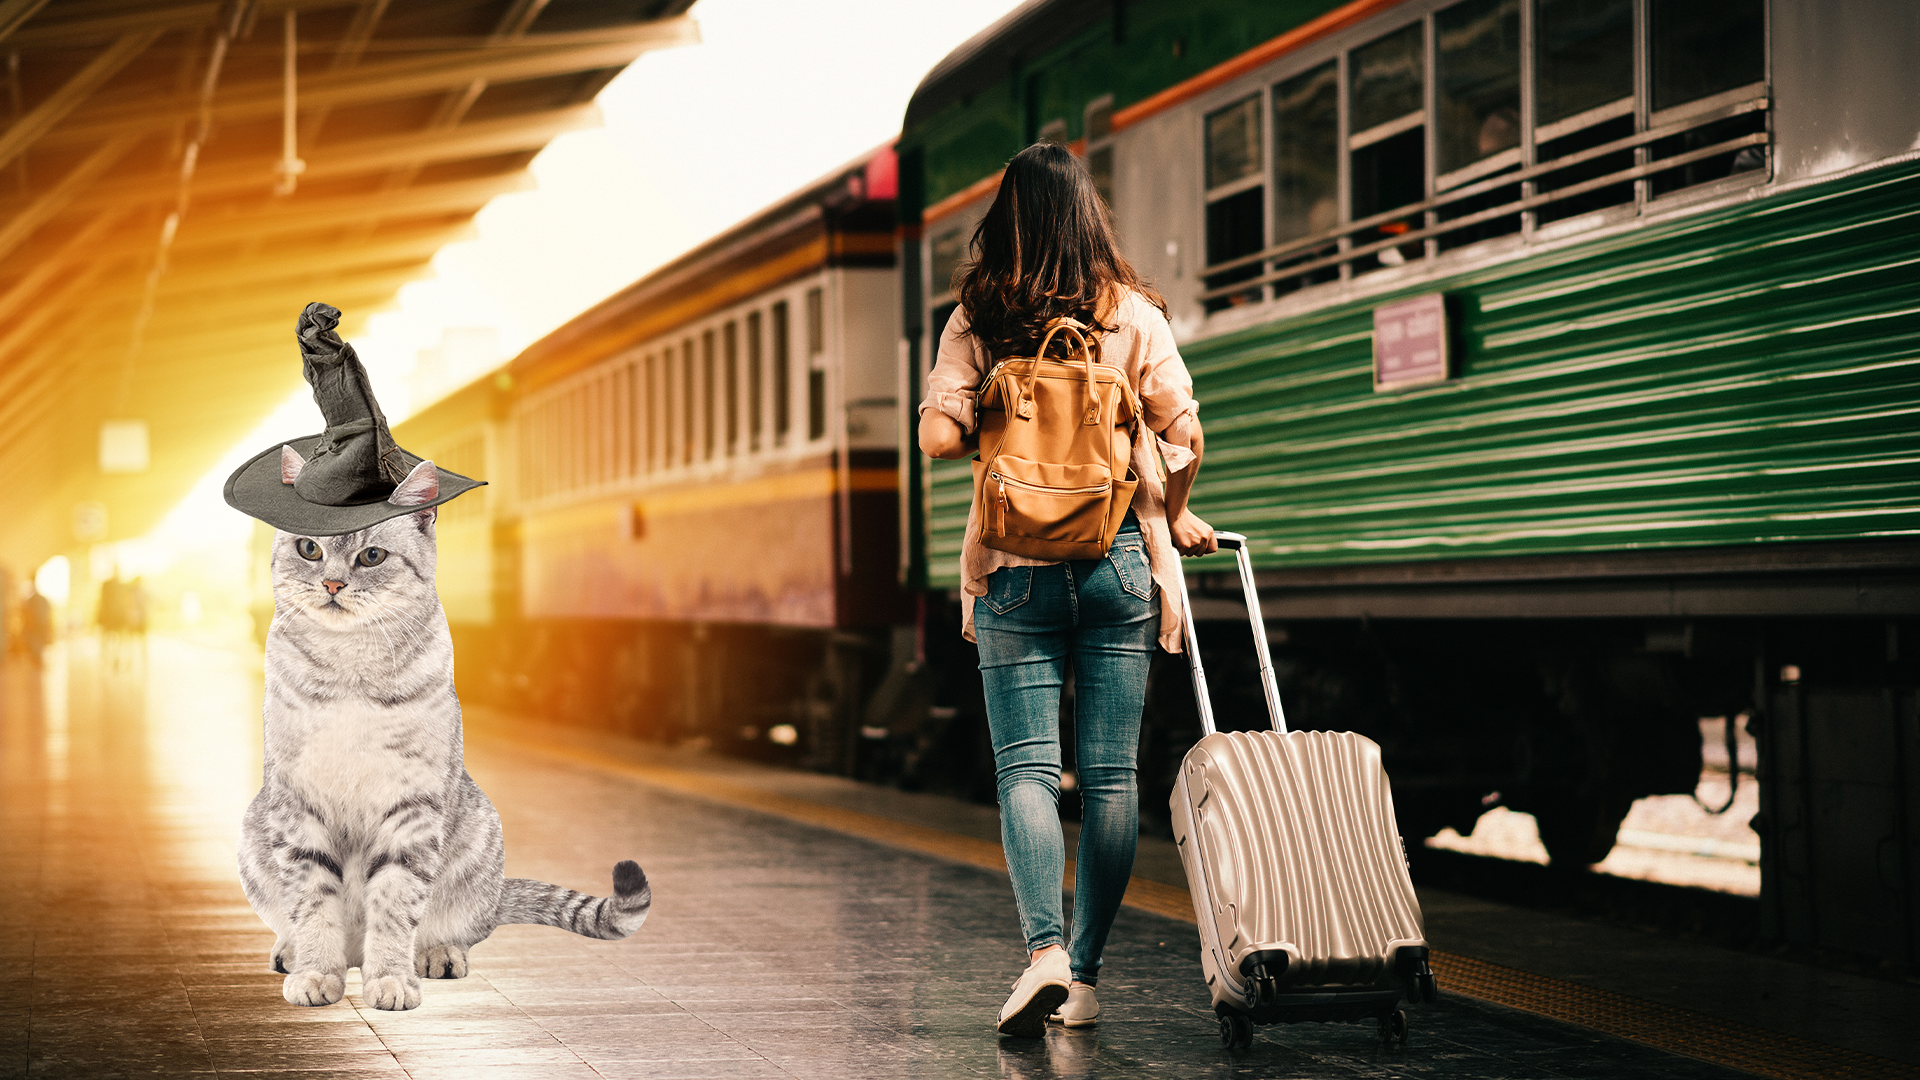 Train platform with McGonagall cat 